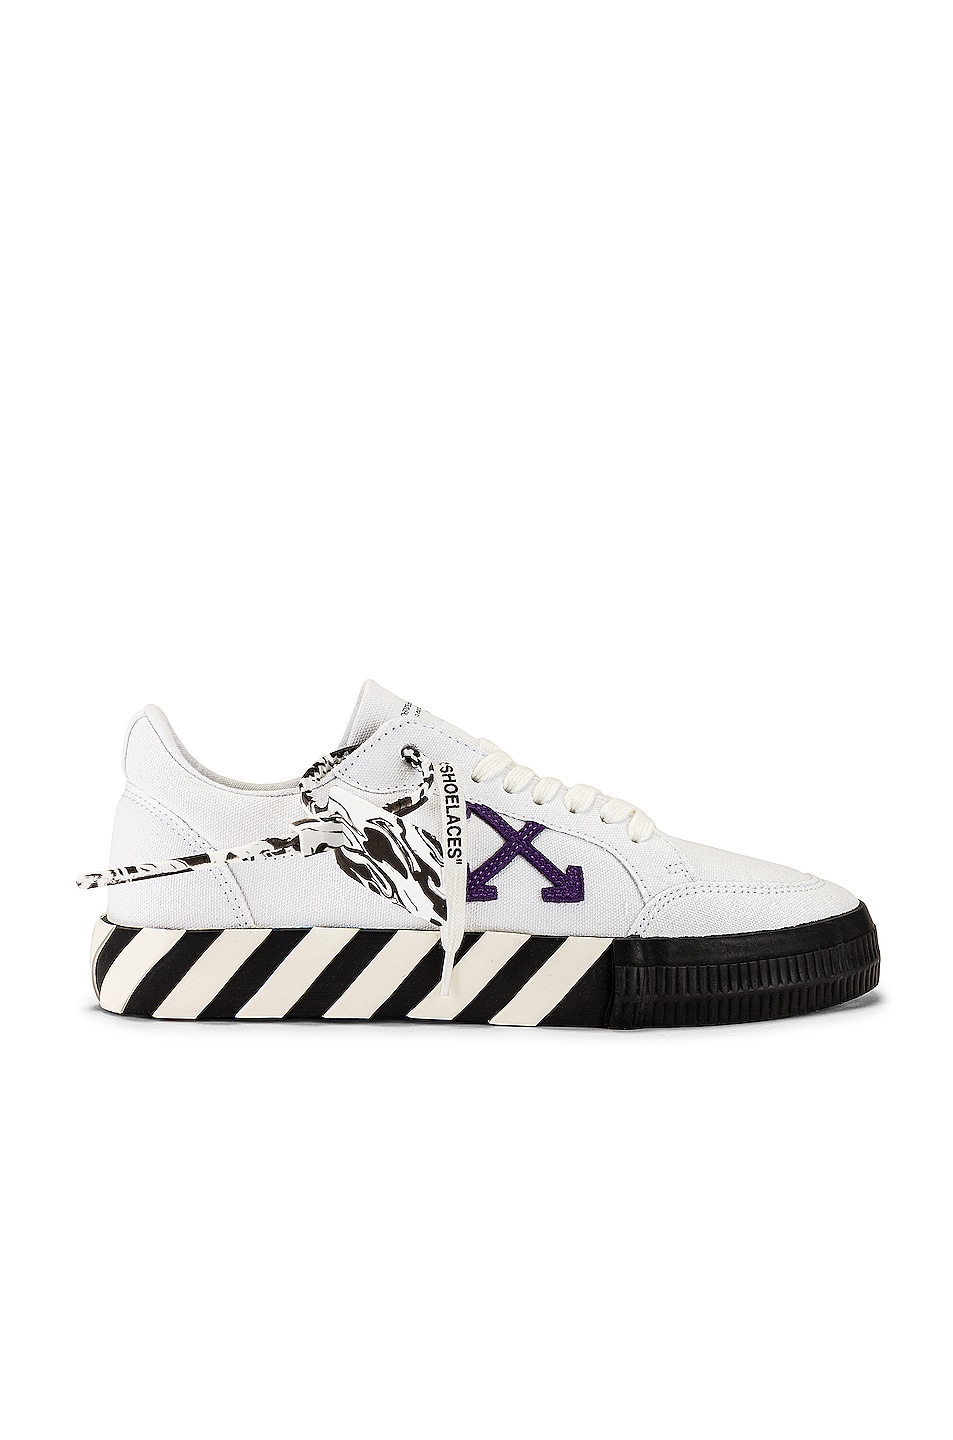 OFF-WHITE Low Vulcanized Canvas Sneaker in White & Purple | FWRD